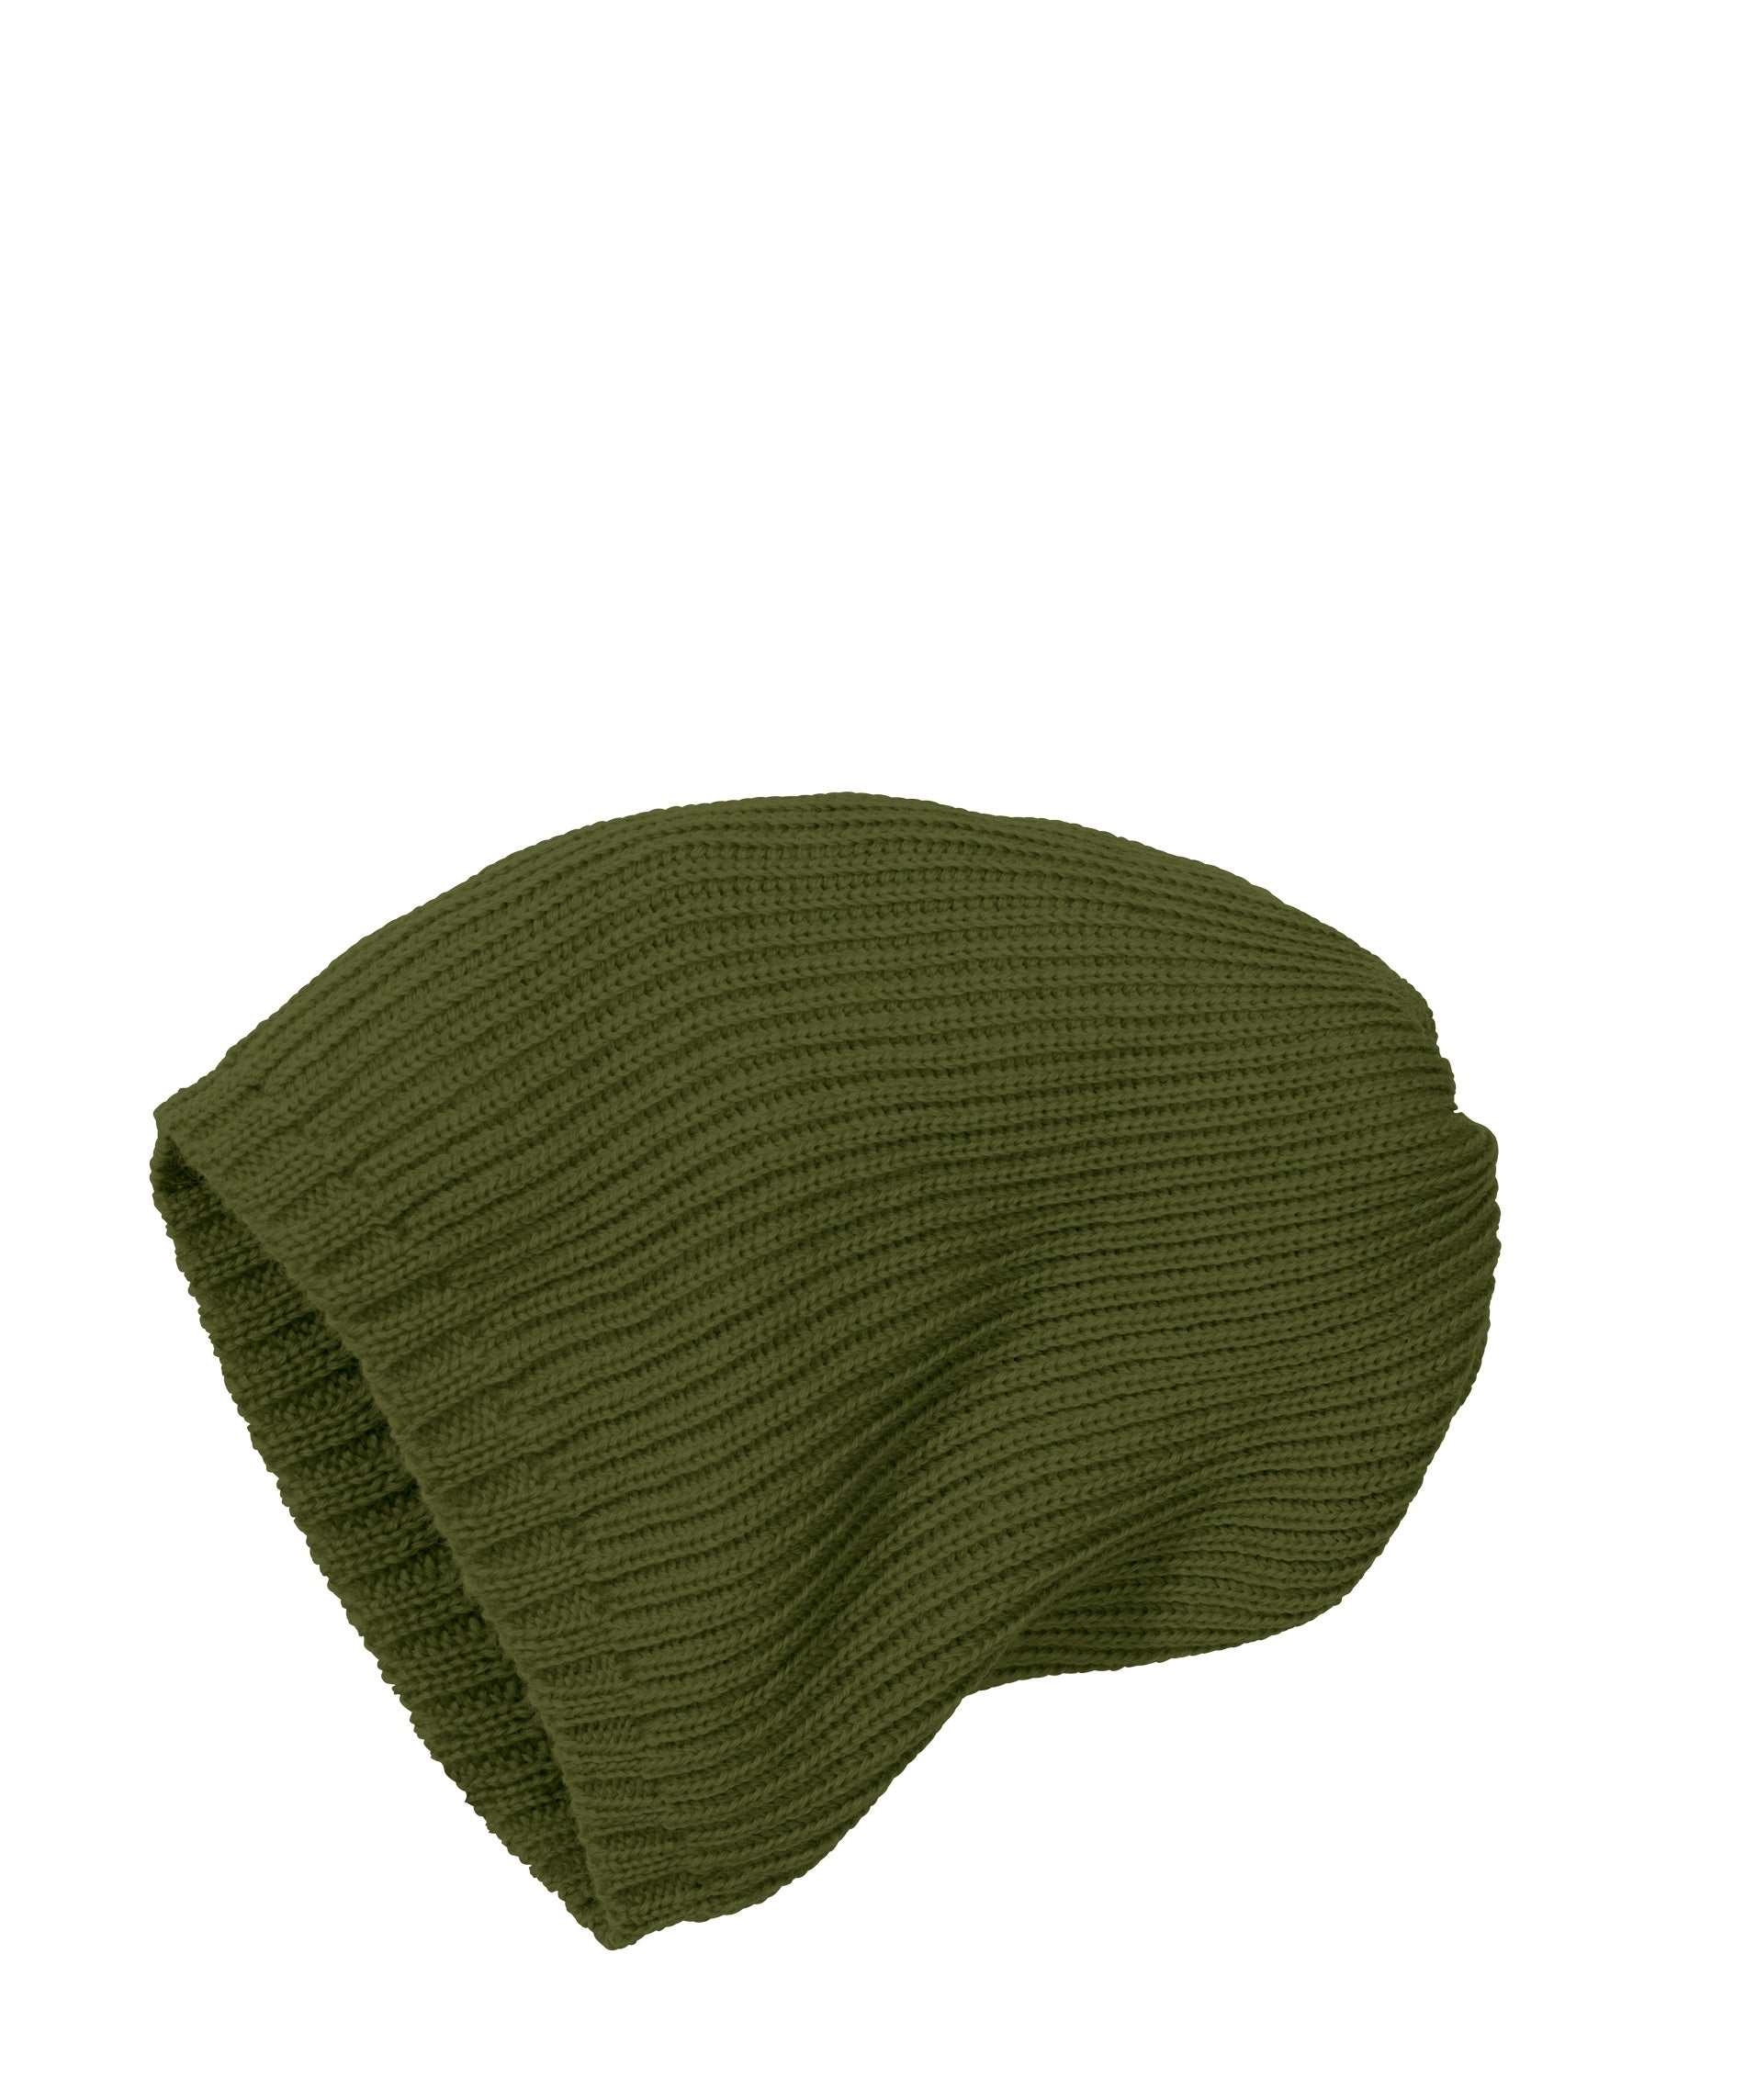 Disana Knitted Wool Hat Olive - Muts Gebreide Wol Olijf Groen